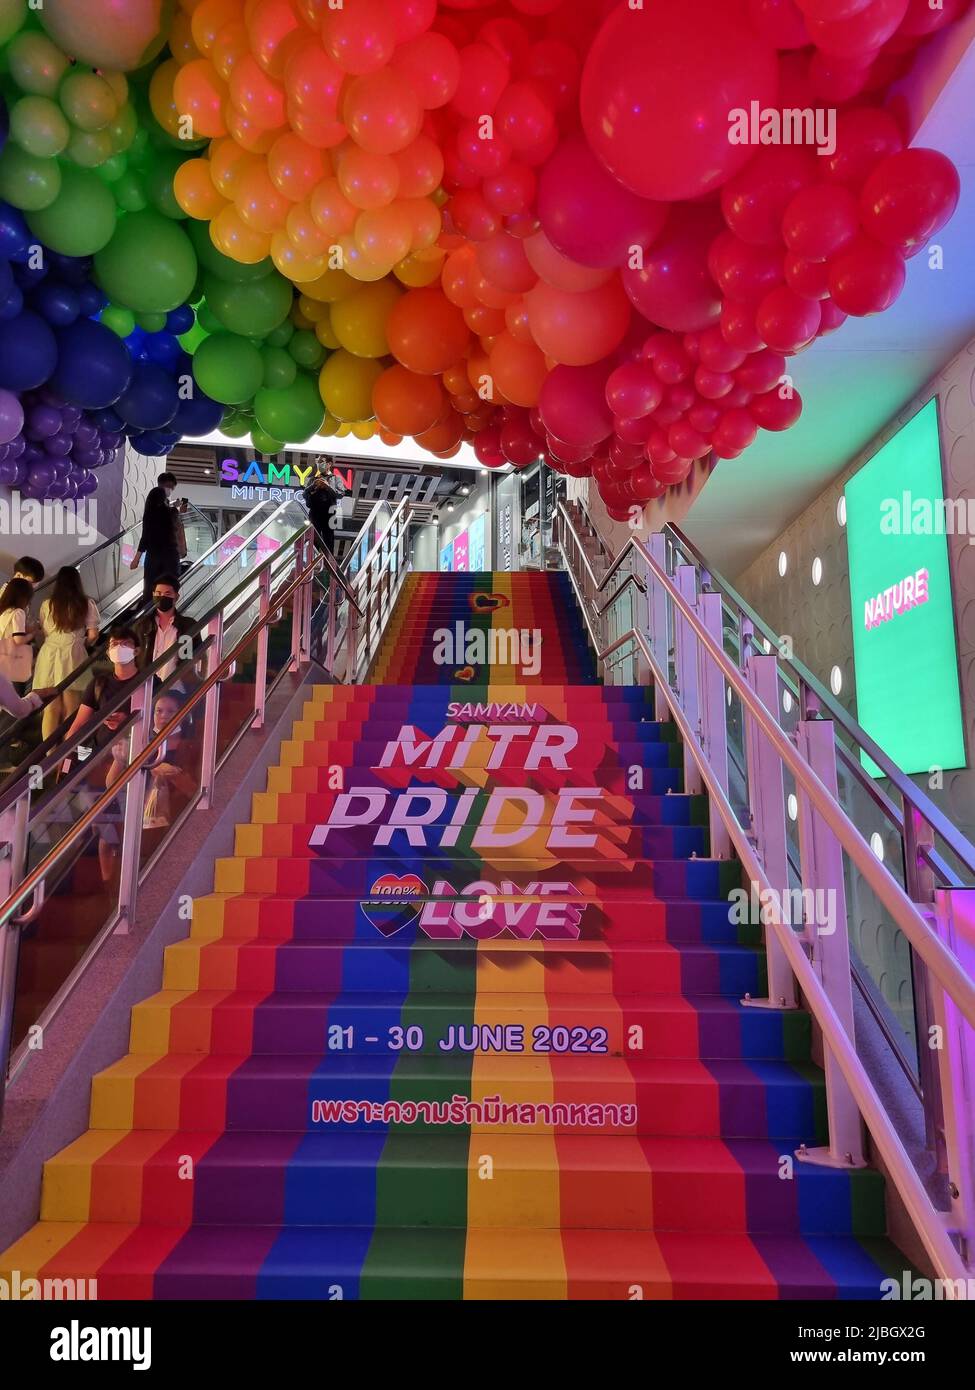 LGBTQ+ Pride Month 2022 celebration in Thailand Stock Photo